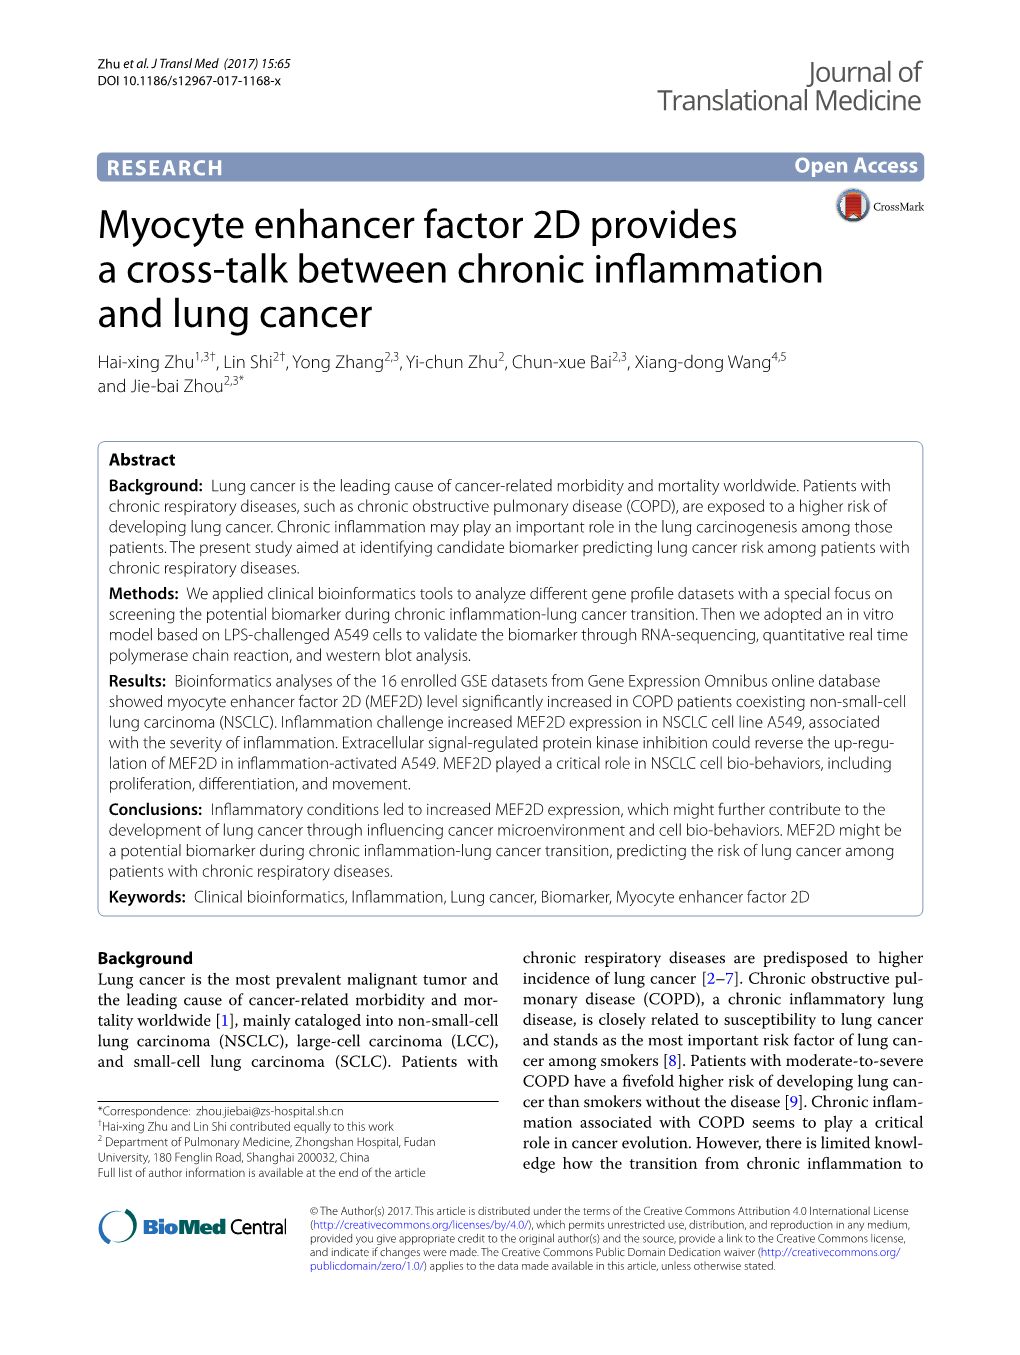 Myocyte Enhancer Factor 2D Provides a Cross-Talk Between Chronic